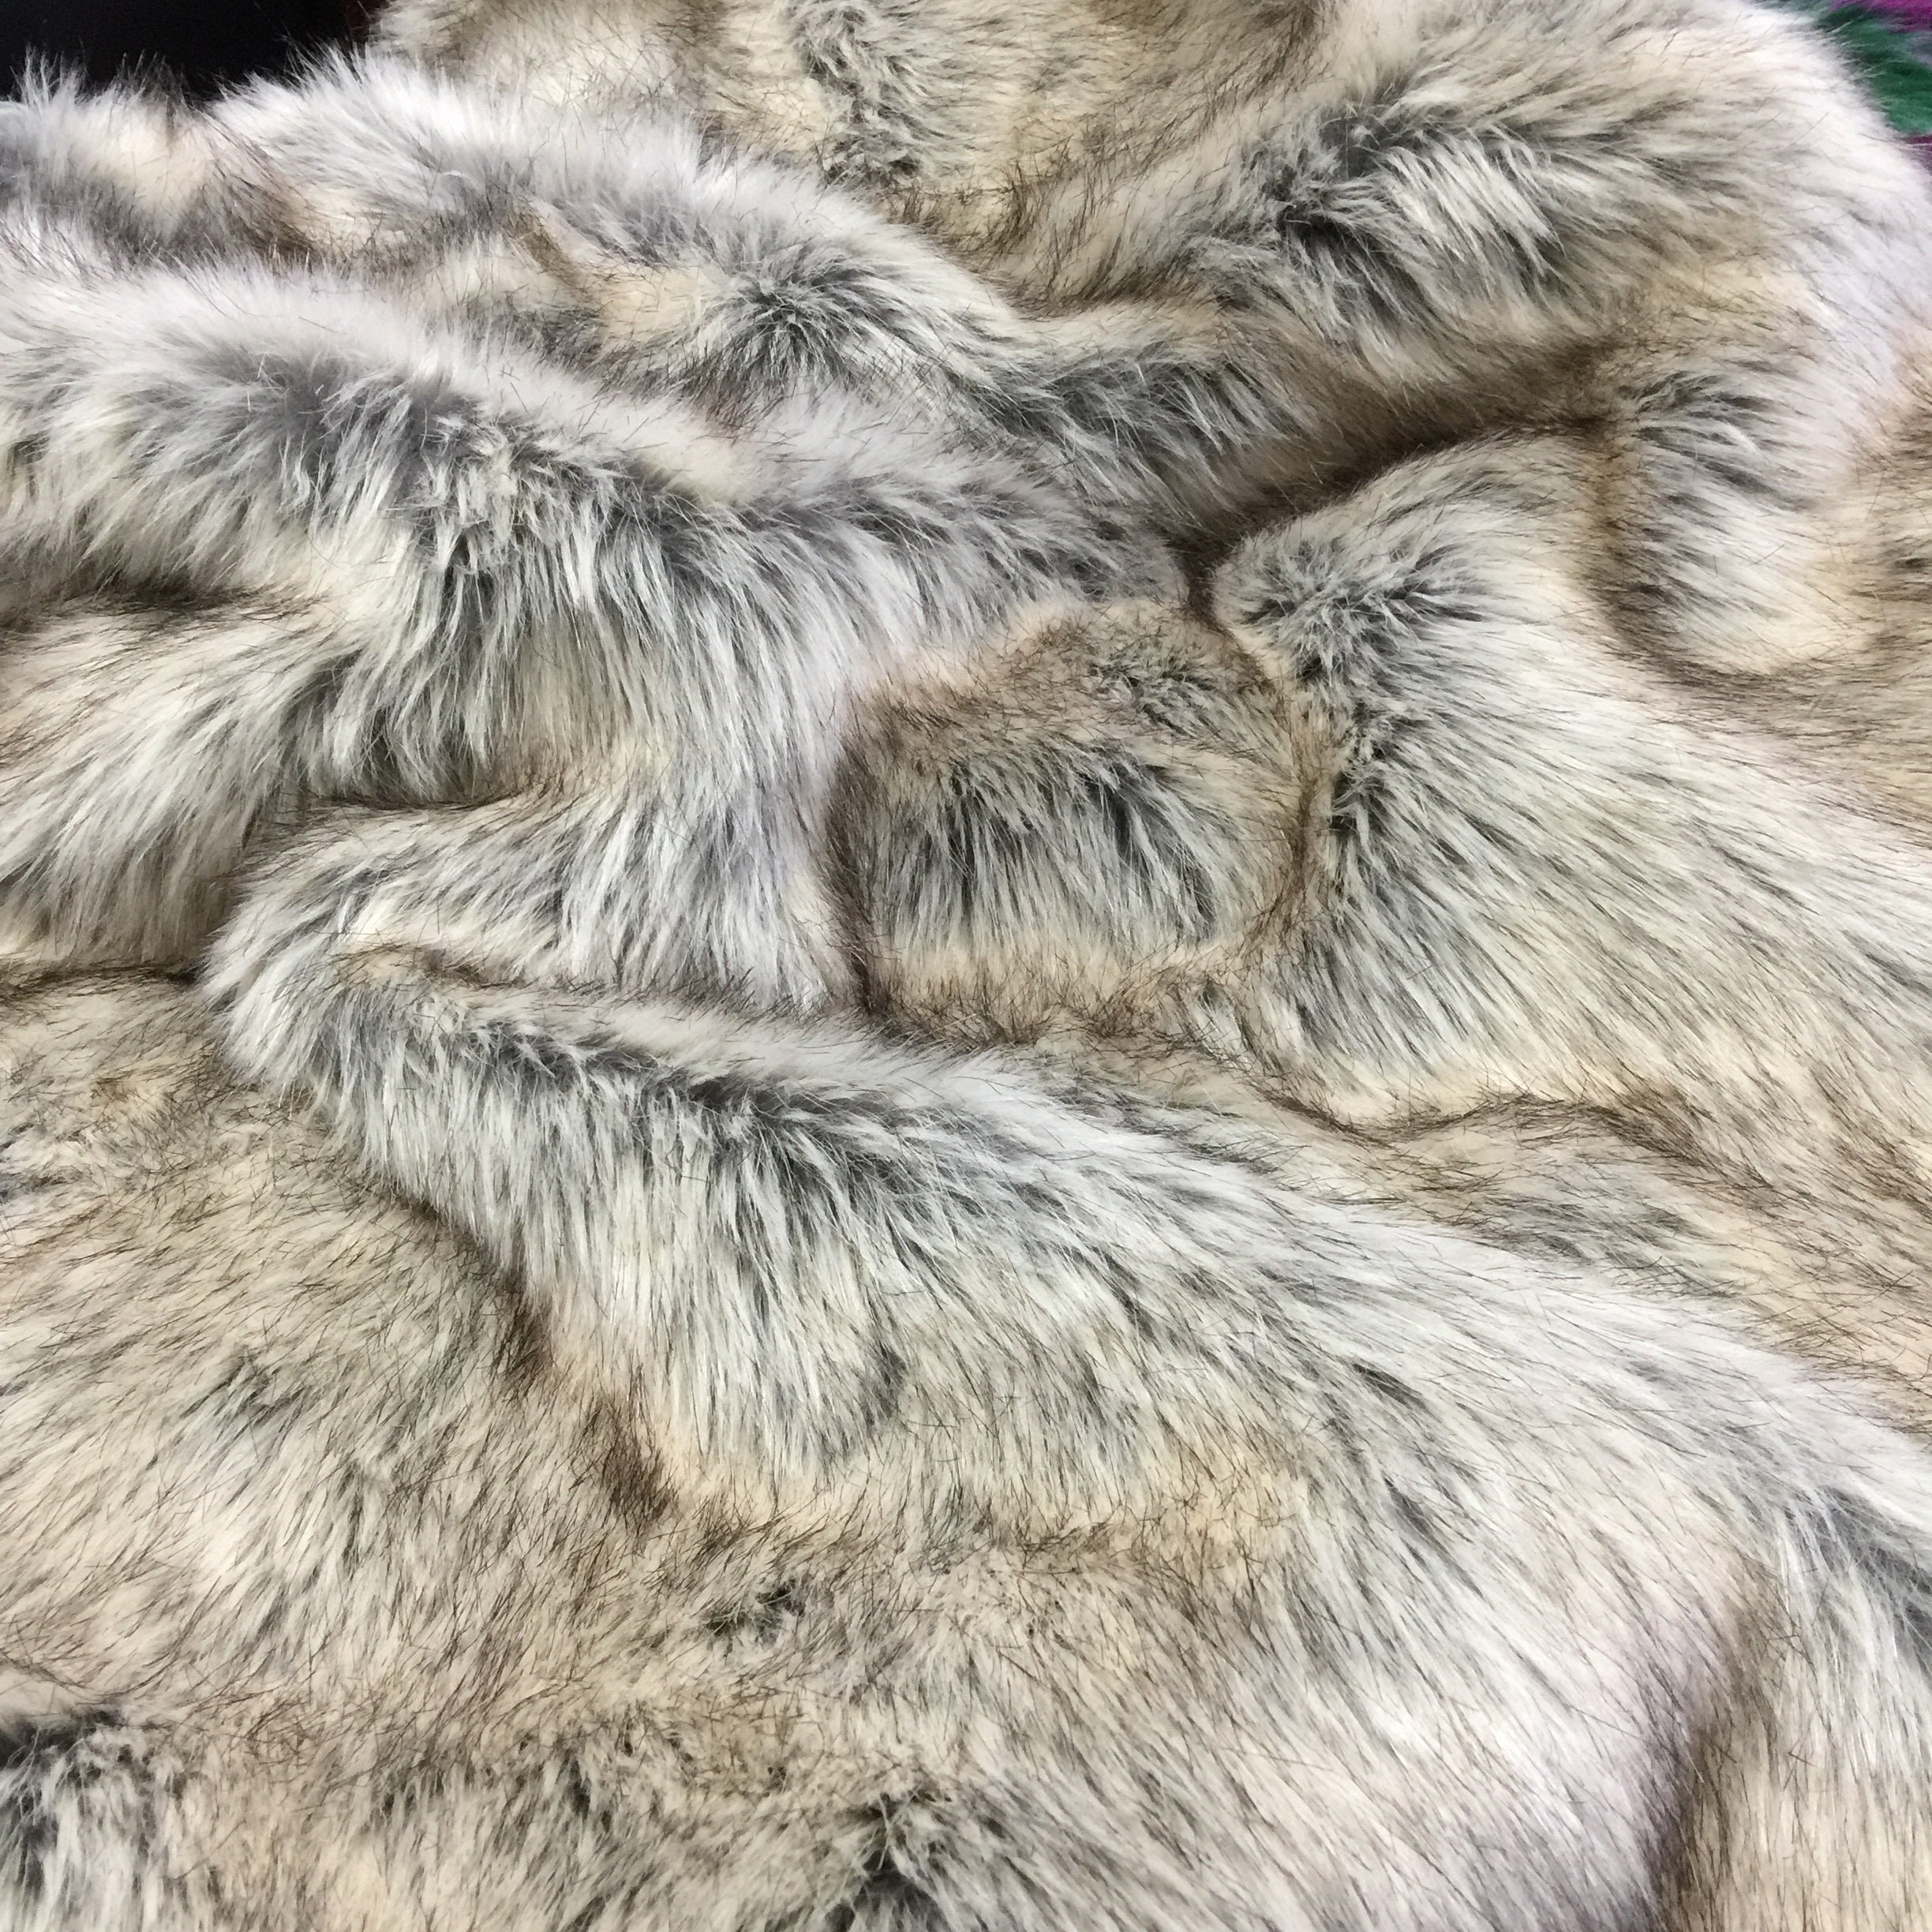 Khaki Black White Mixed ColorWolf Fur Bears FurLong Pile | Etsy